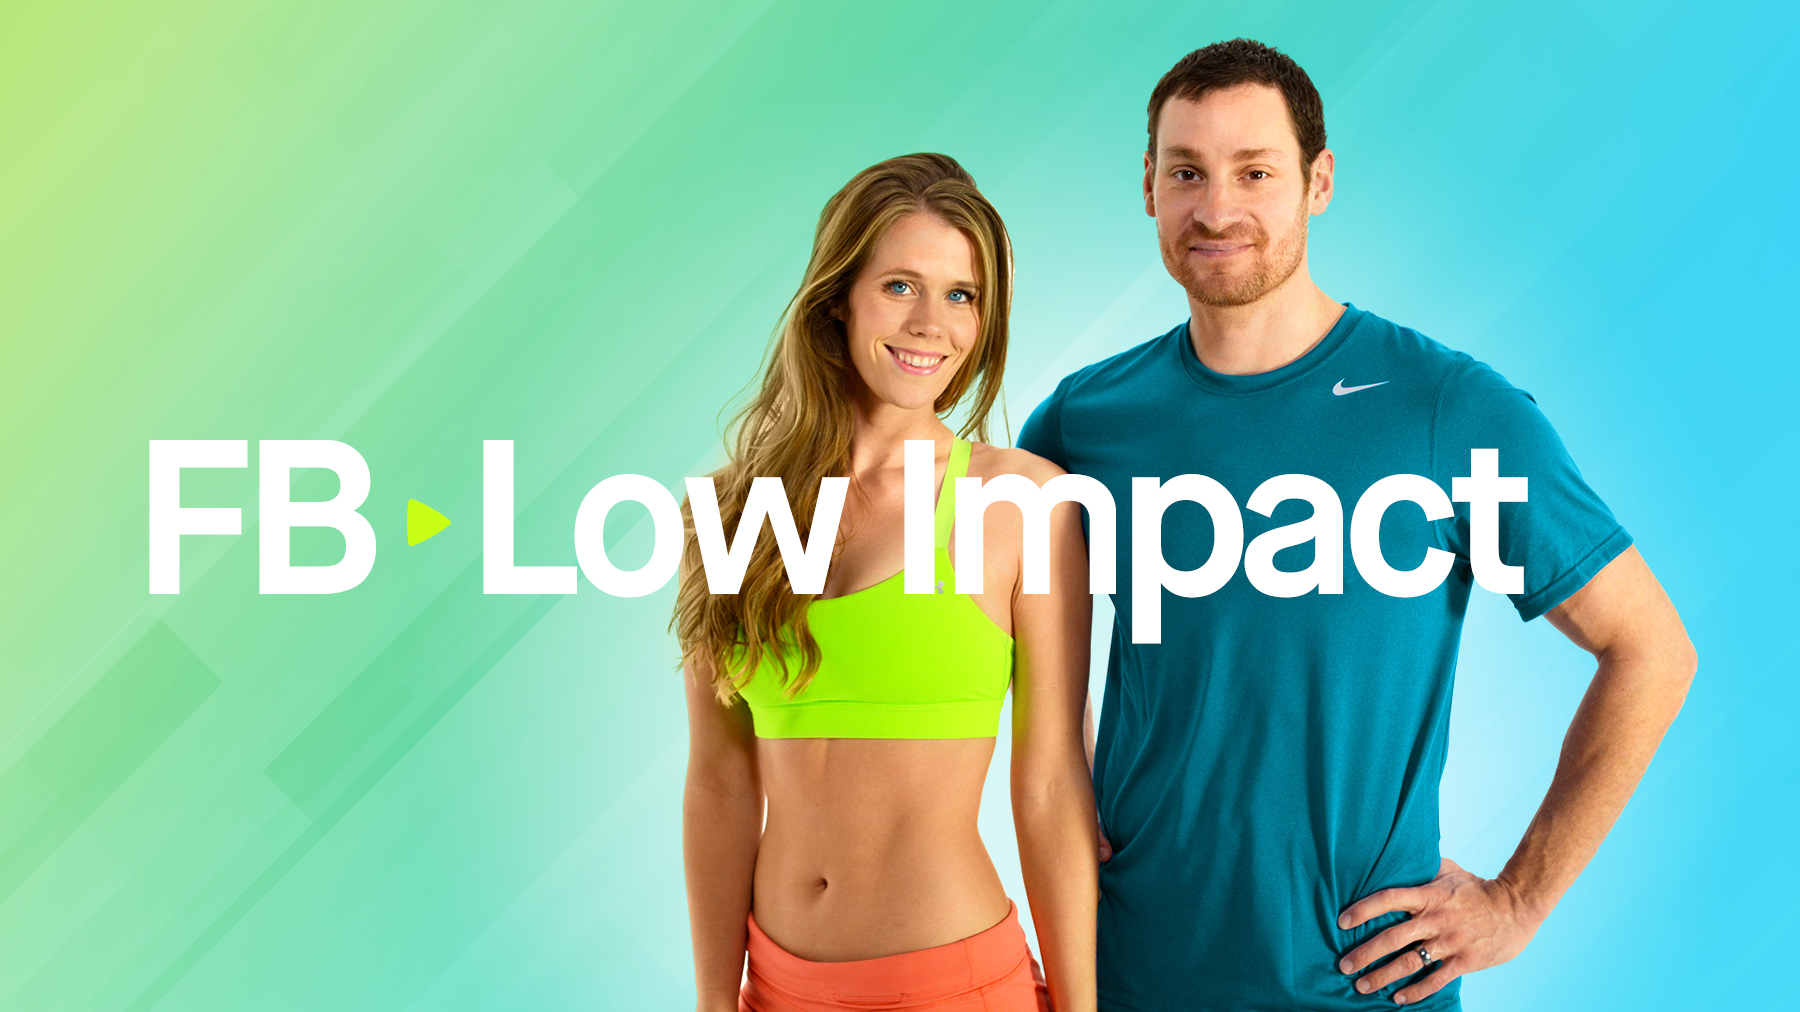 FB Low Impact - Fat Loss Program - 40 Minutes | Fitness